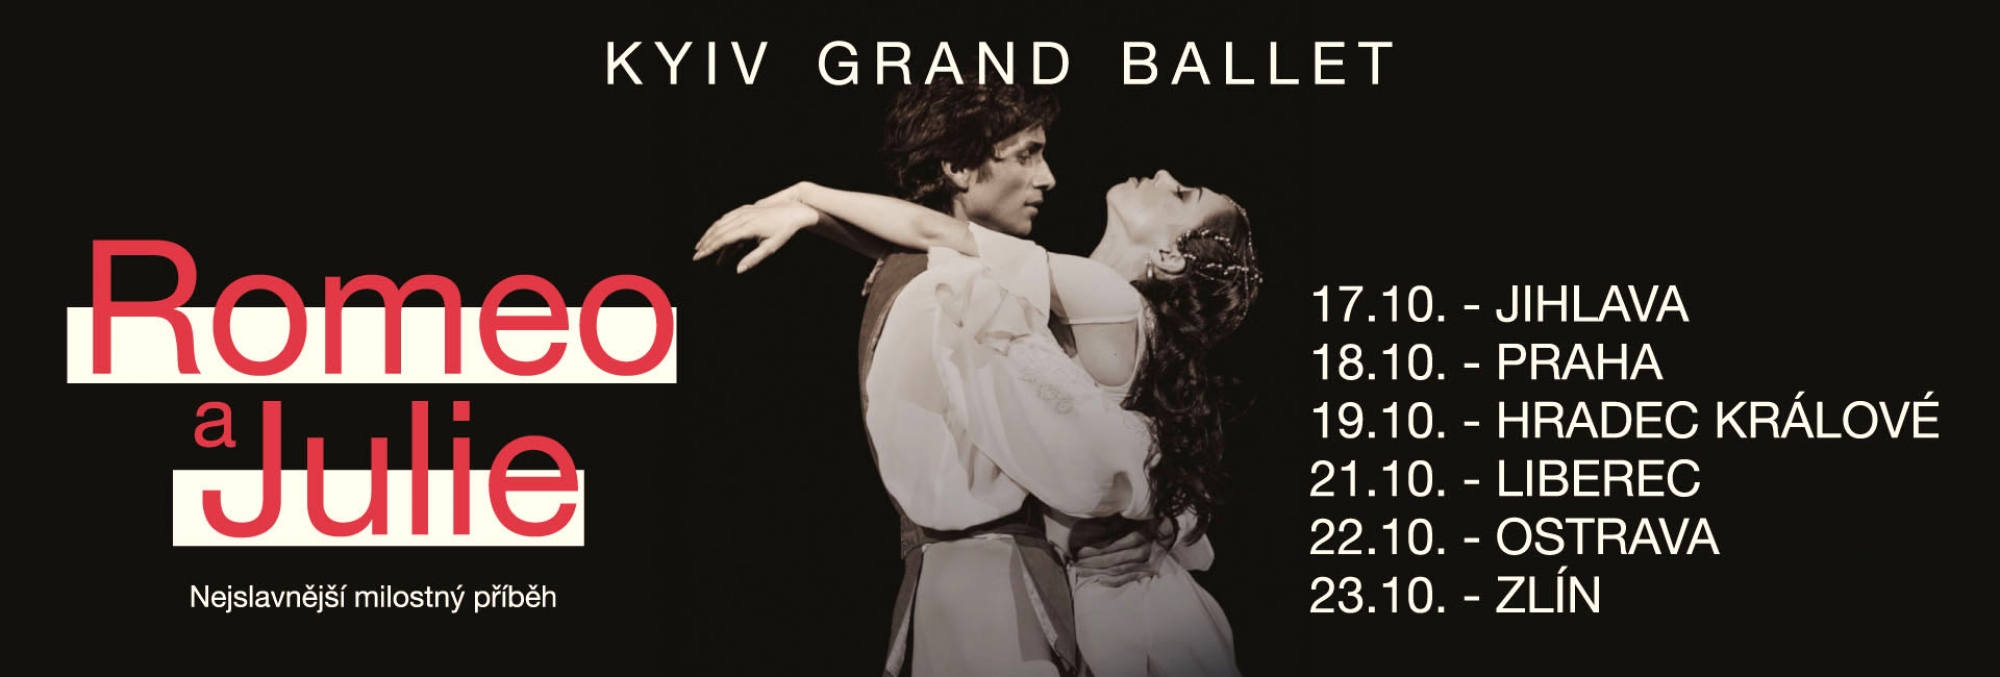 KYIV GRAND BALLET "Romeo a Julie"